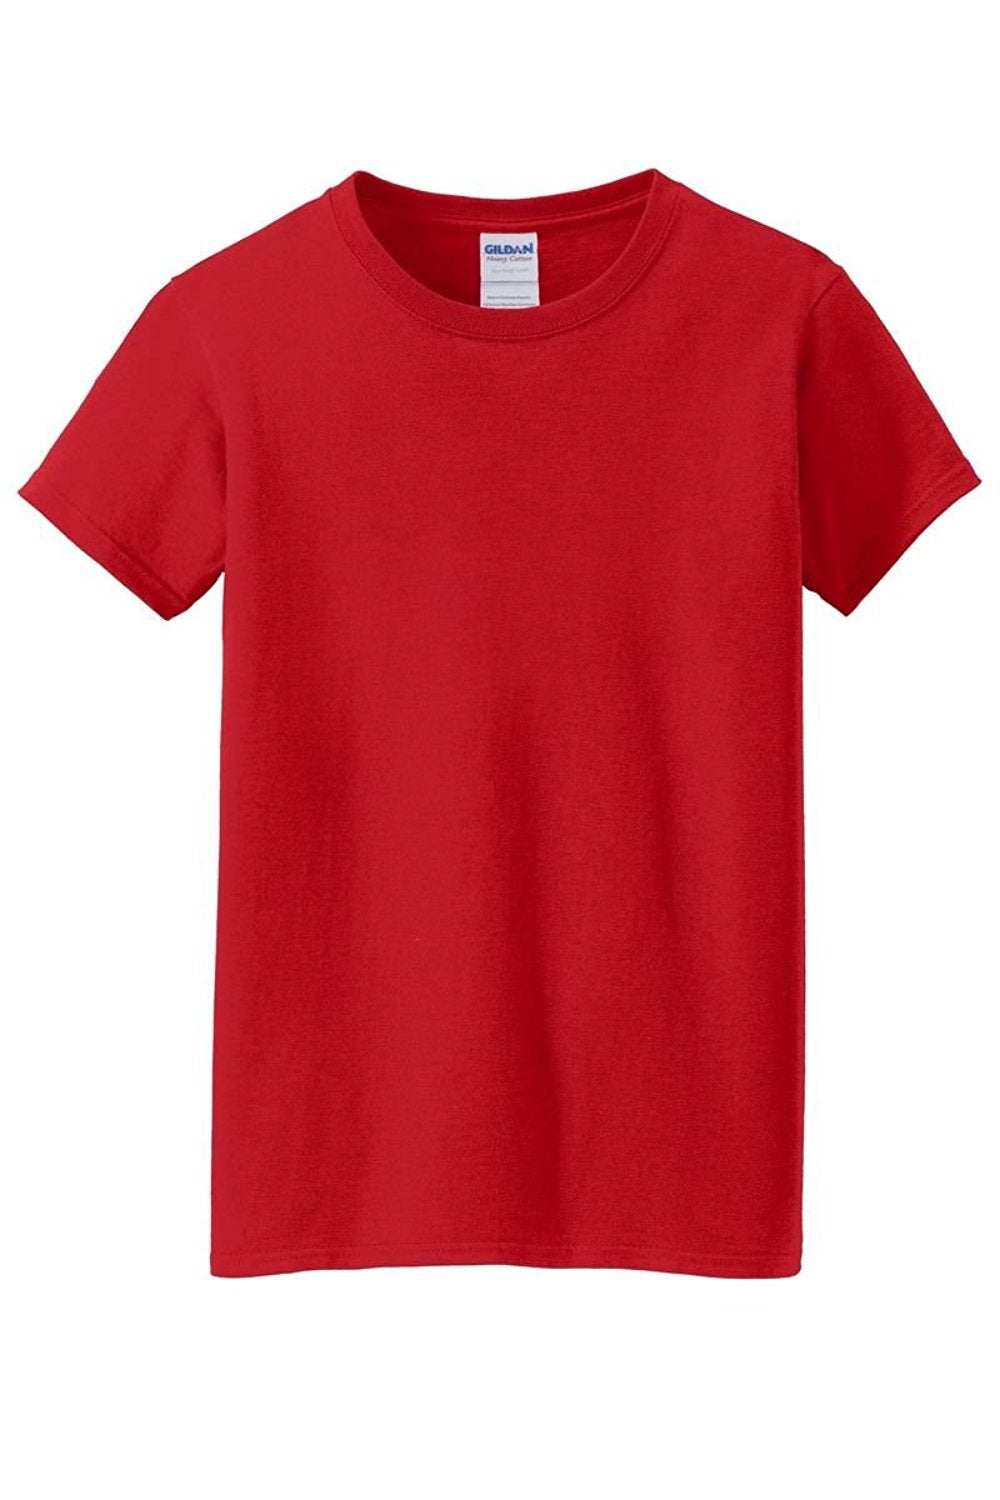 Download Gildan Blank T-Shirt - Unisex Style 5000 Adult - Custom City